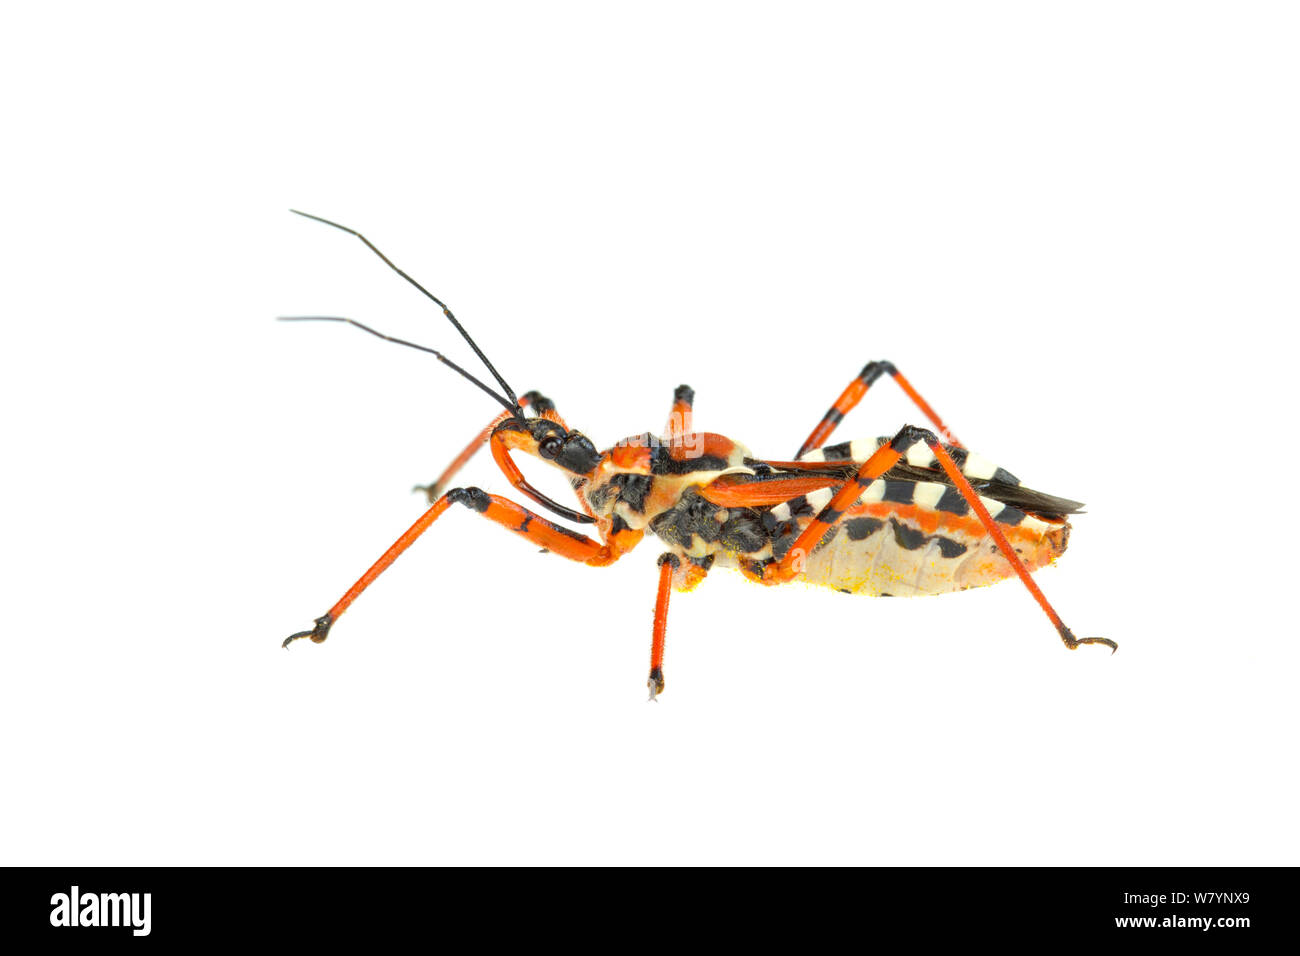 Gefleckte assassin Bug (Rhynocoris punctiventris), Karmel-gebirge, Israel, März. Fokus - gestapelt und 7/8. meetyourneighbors.net Projekt Stockfoto